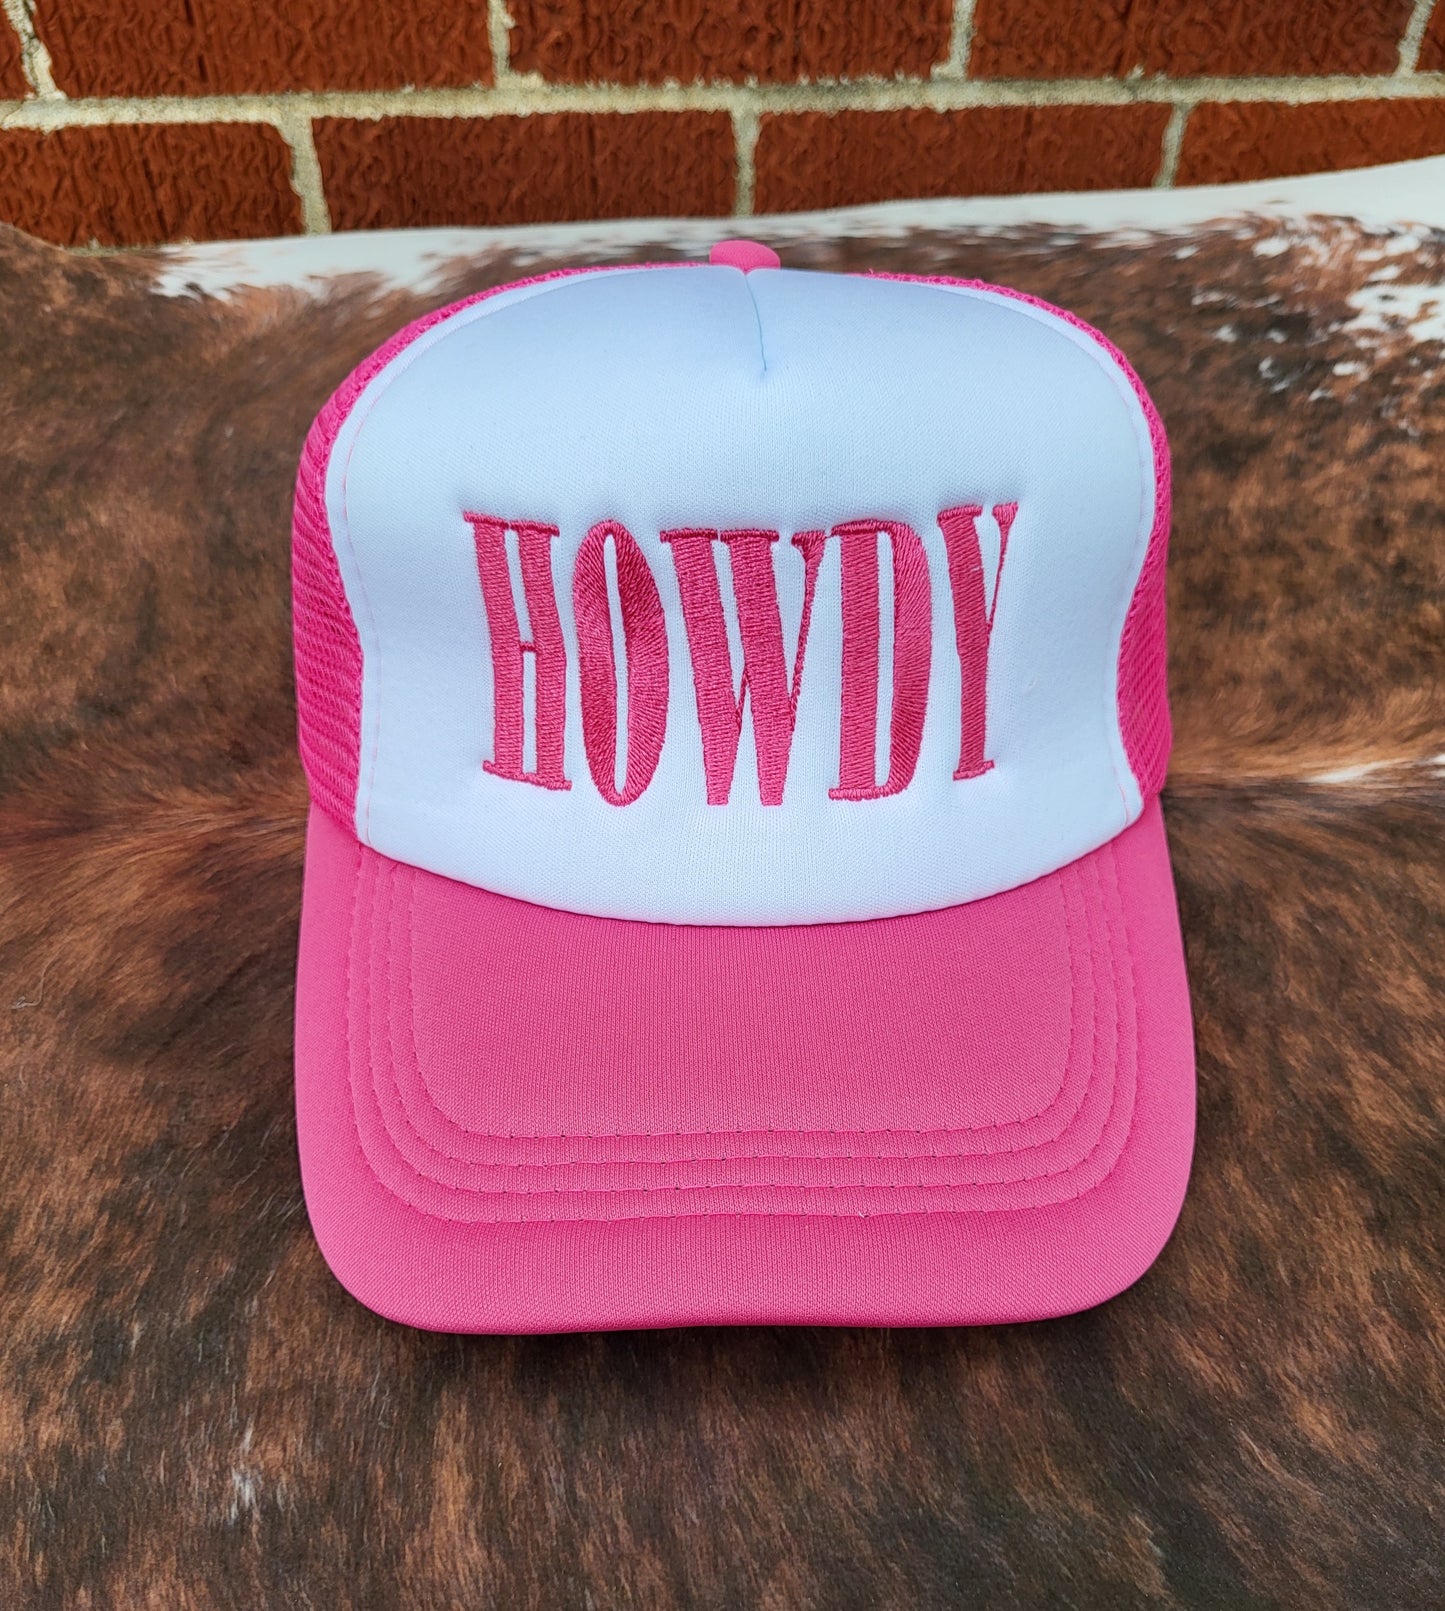 RTS Howdy Trucker Hat